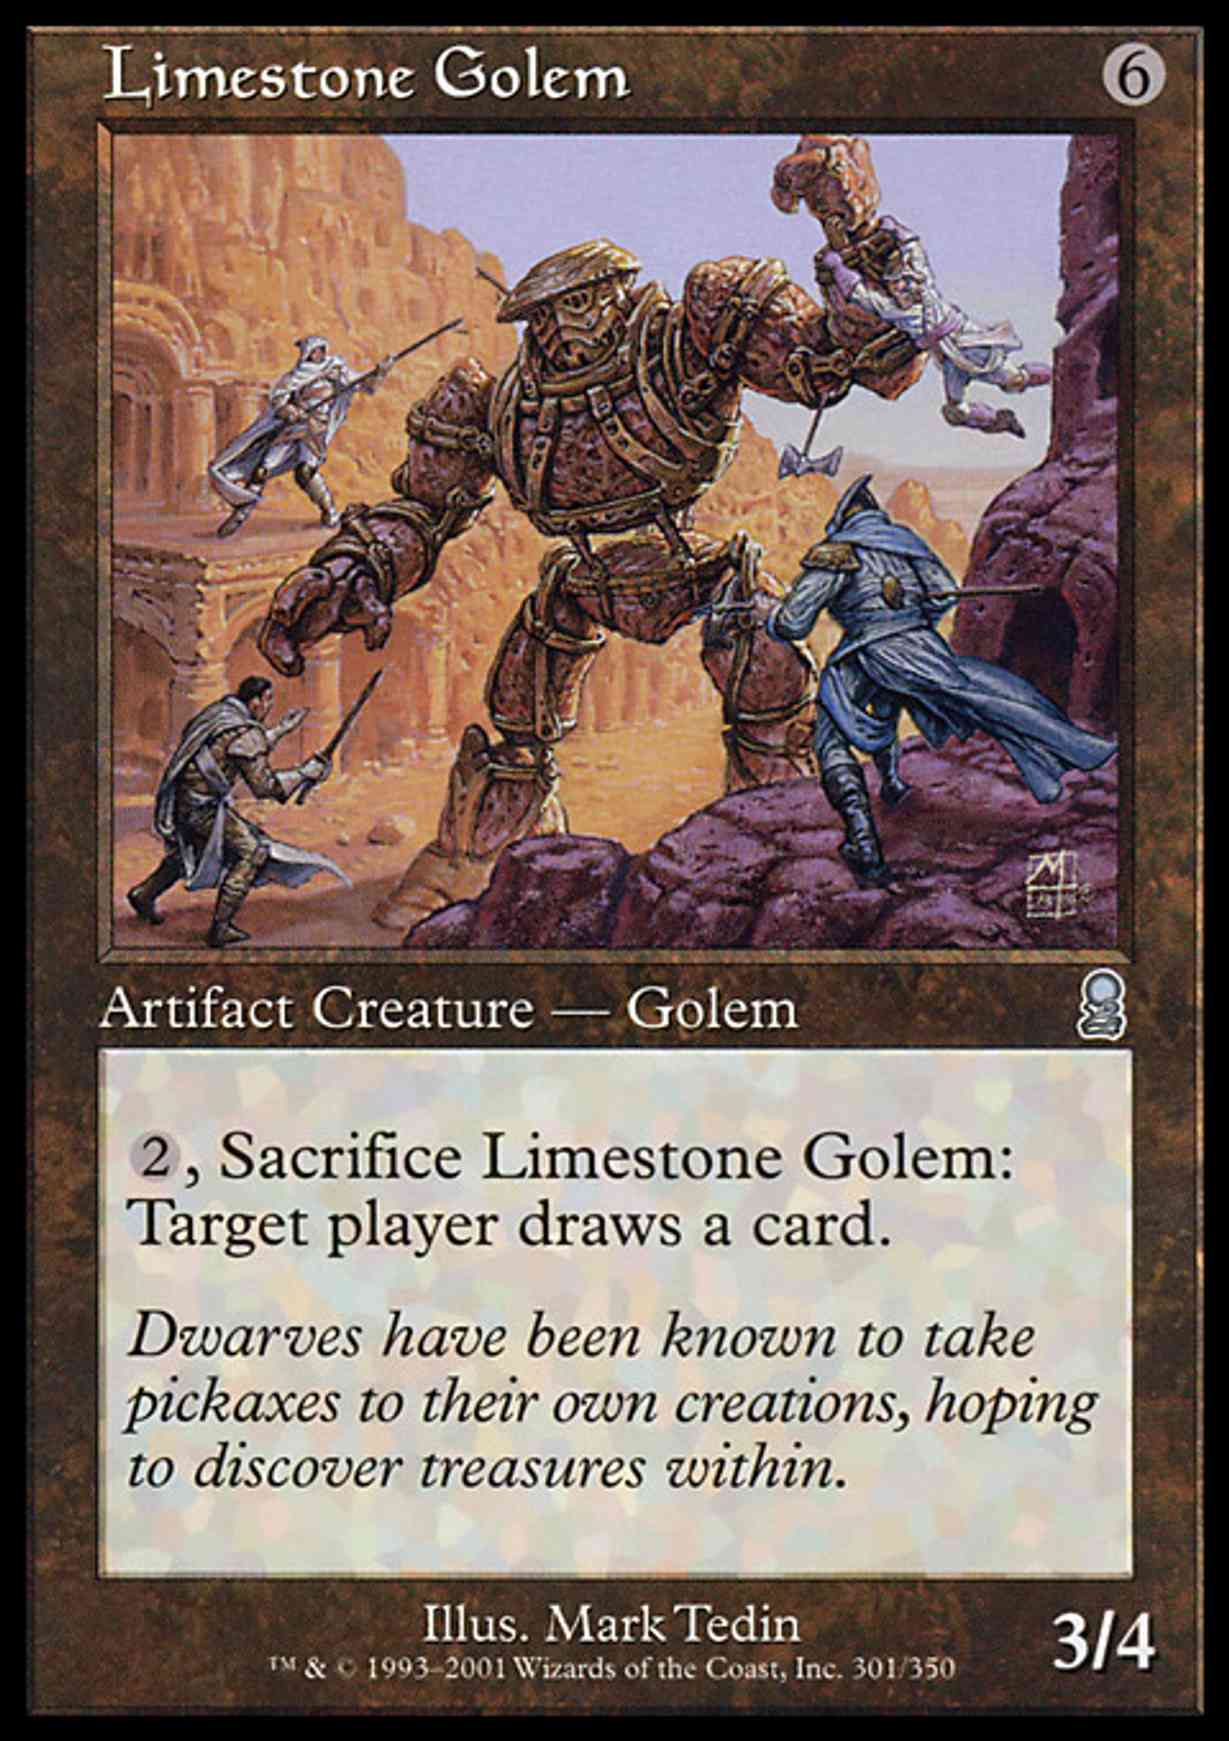 Limestone Golem magic card front